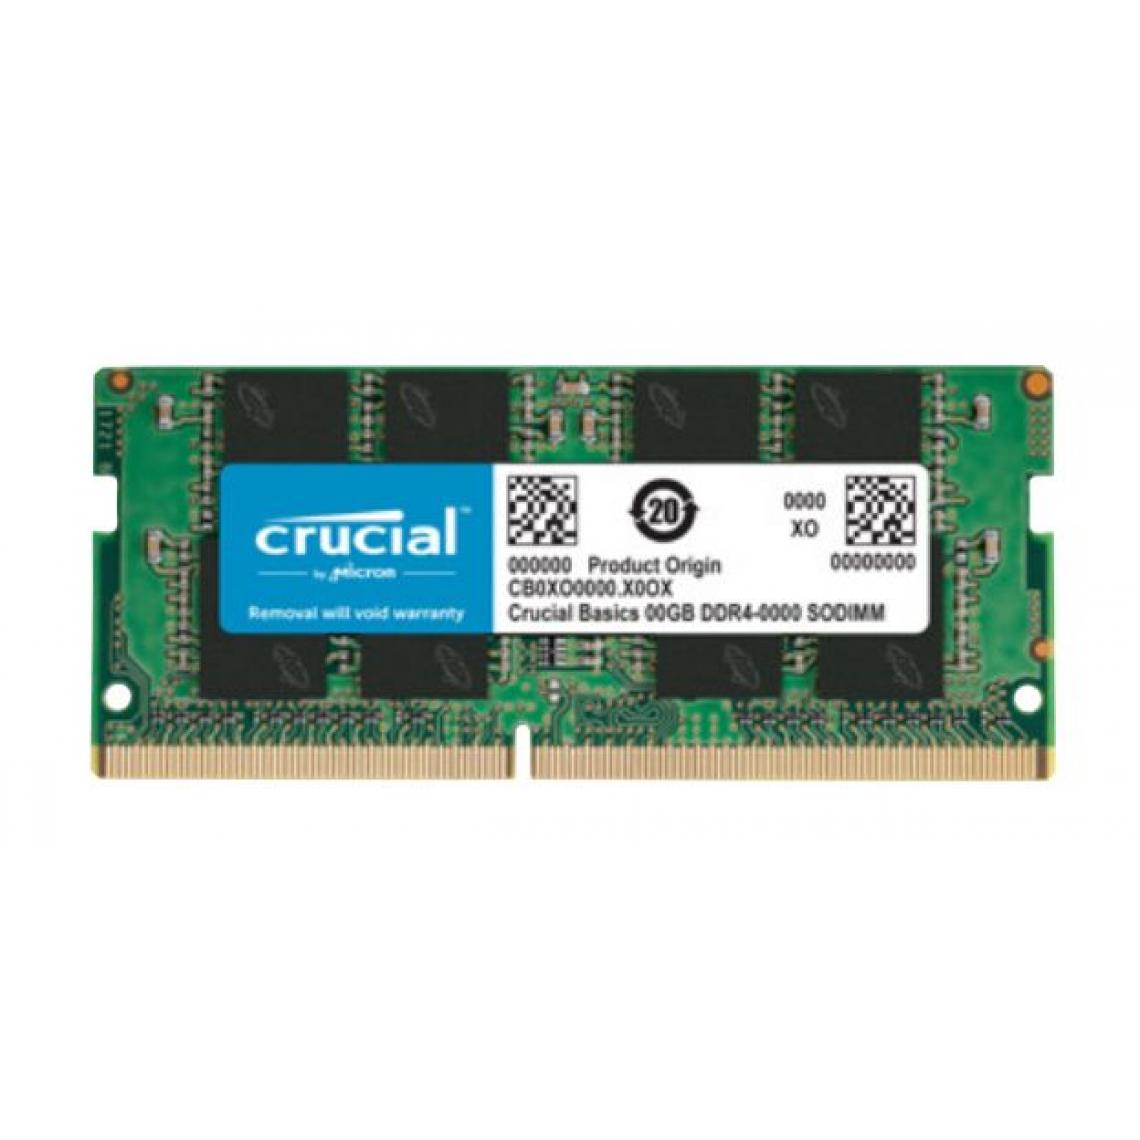 Eurovideo Vg - Crucial CB4GS2666 module de mémoire 4 Go 1 x 4 Go DDR4 2666 MHz - RAM PC Fixe